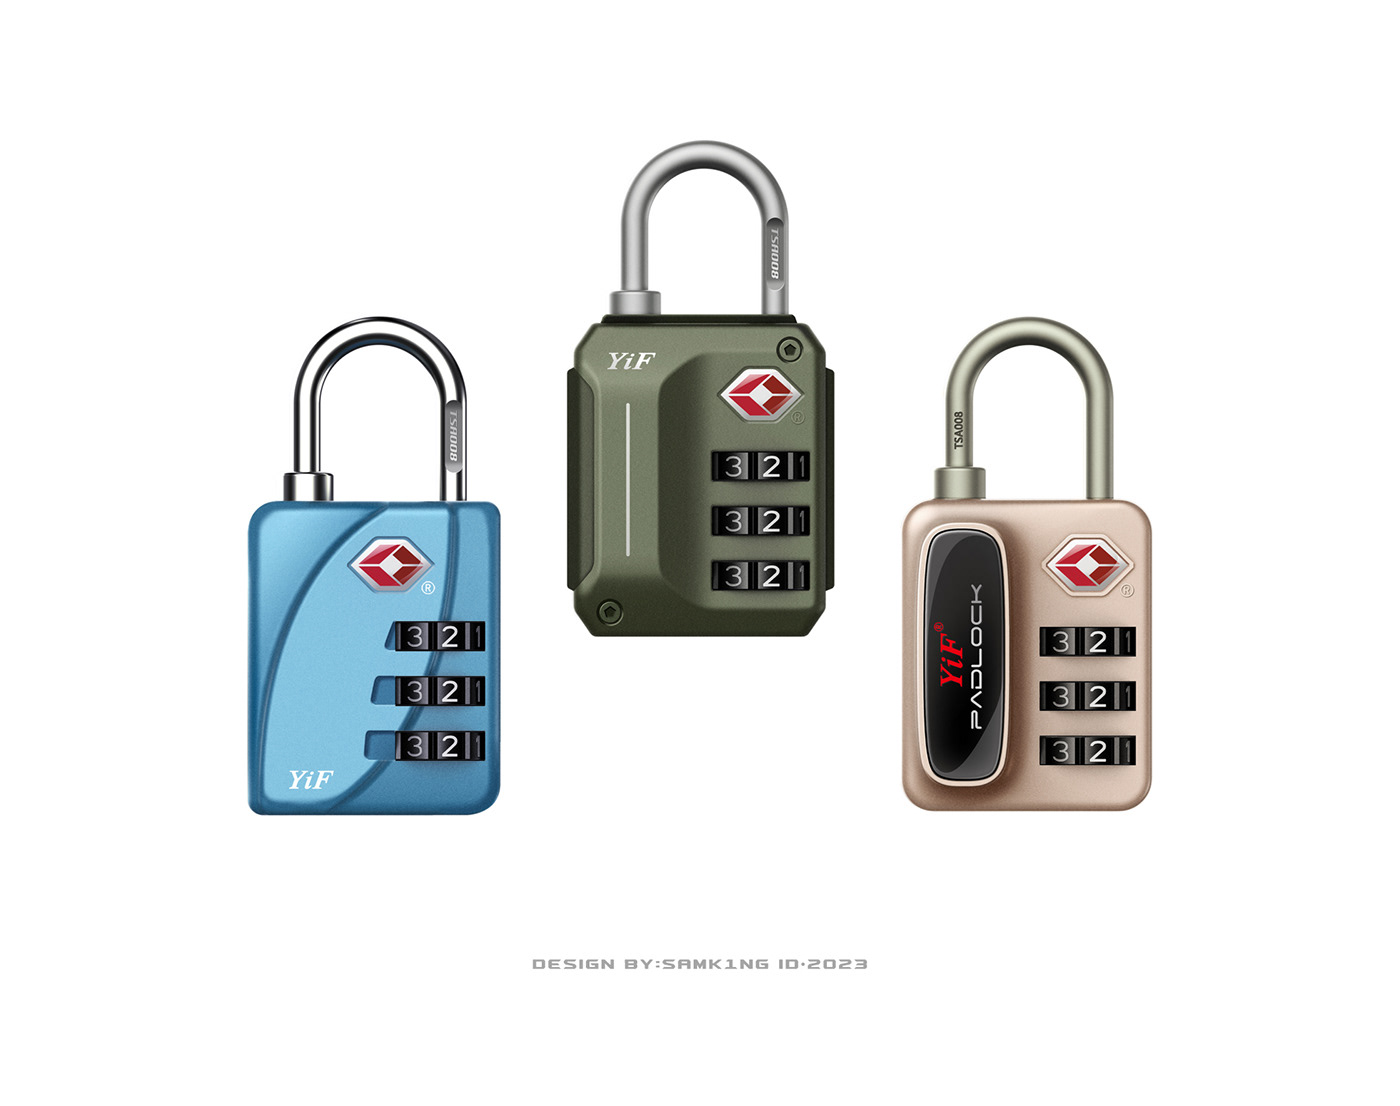 lock locksmith Lockout 2D design safety Password Fashion  rekey Travel Lock